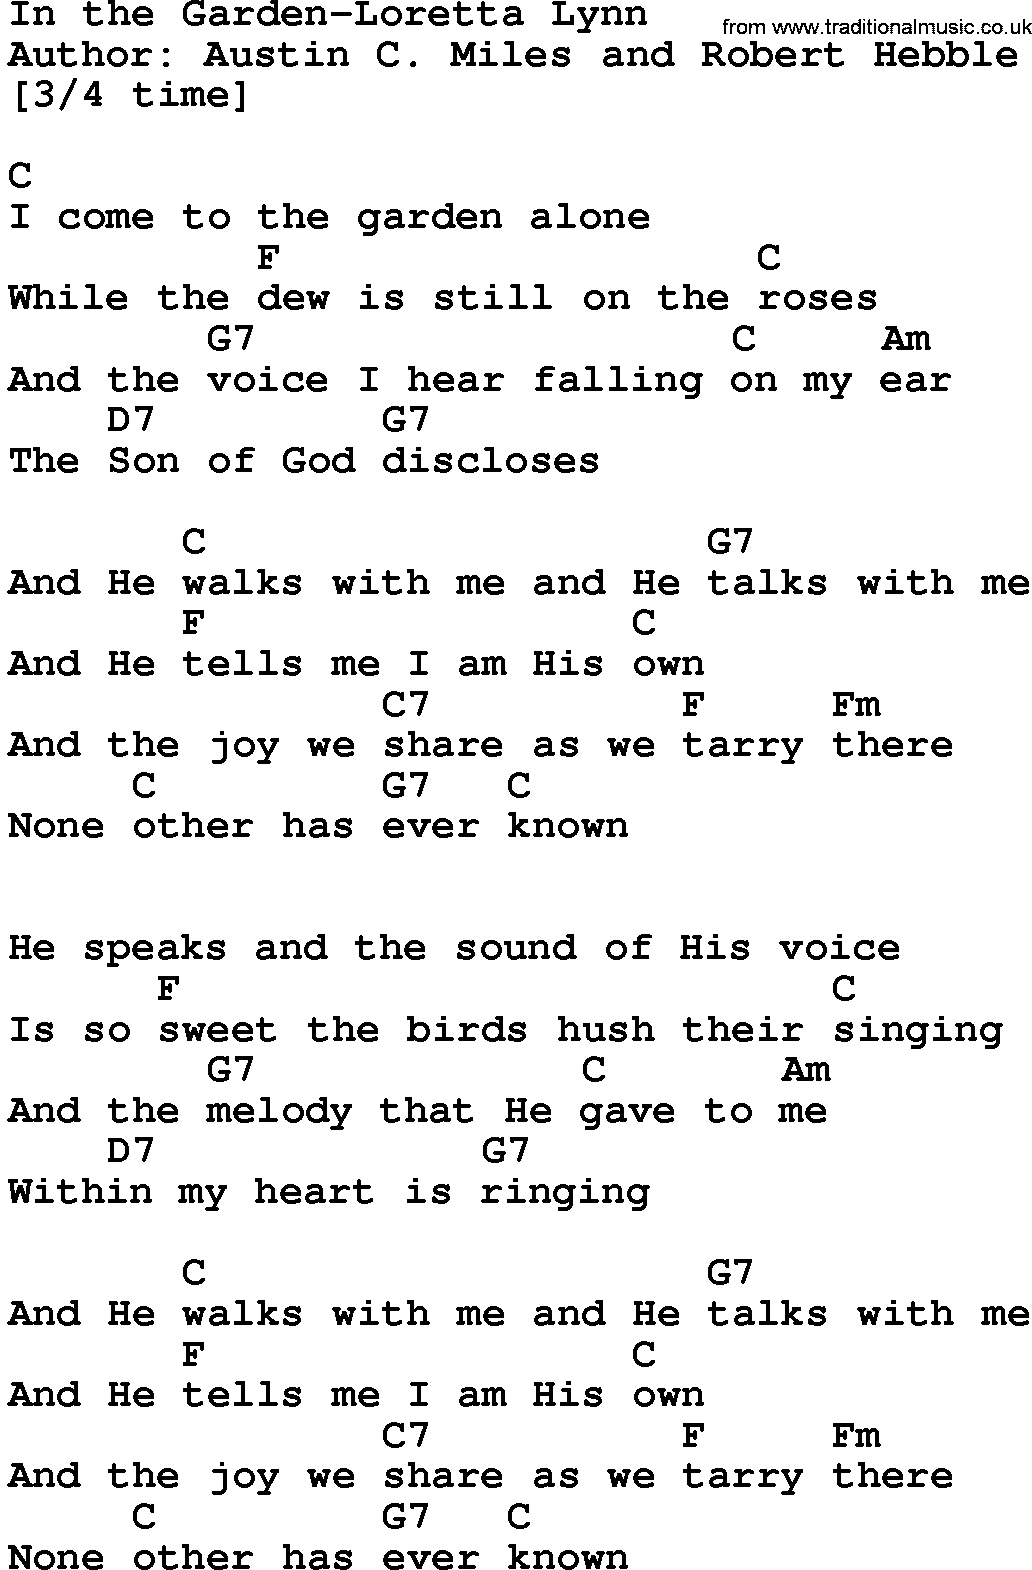 Country music song: In The Garden-Loretta Lynn lyrics and chords